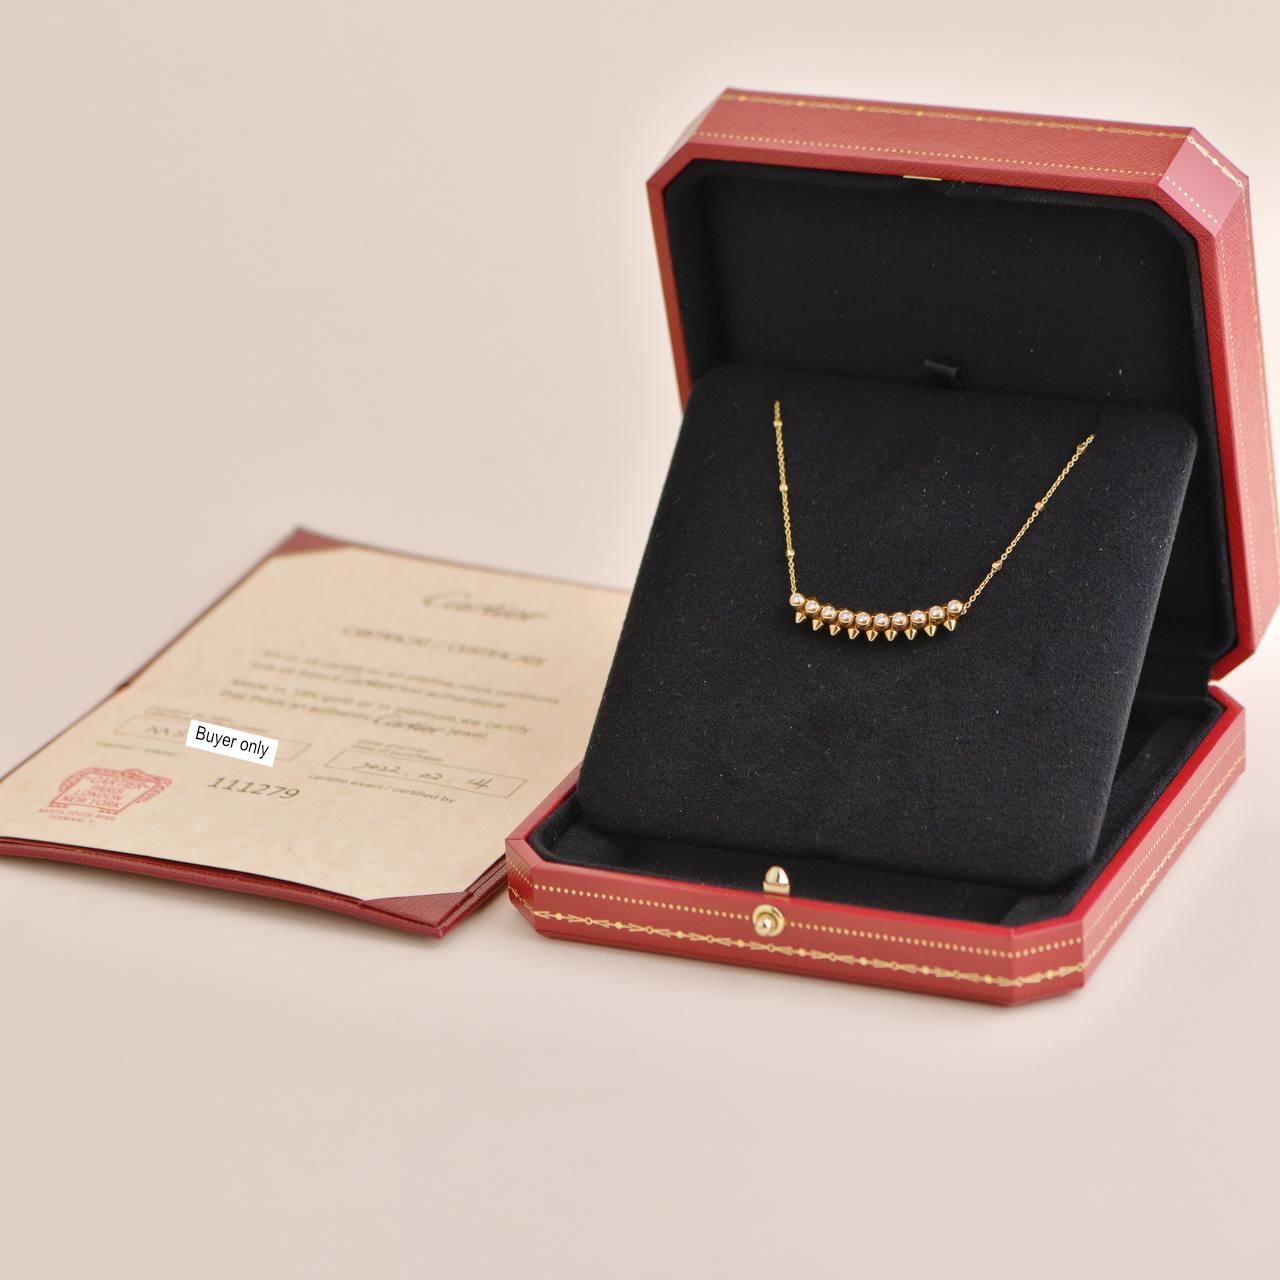 SKU CT-1953
Brand Cartier
Model B3040900
Date Circa 2022
Serial No.   MS****
__________________________________
RRP: £6,750 incl. VAT/ €7 600 incl. VAT / $7,050
Metal 18k Rose Gold
Weight:  Approx 8.4 grams
Adjustable chain length: